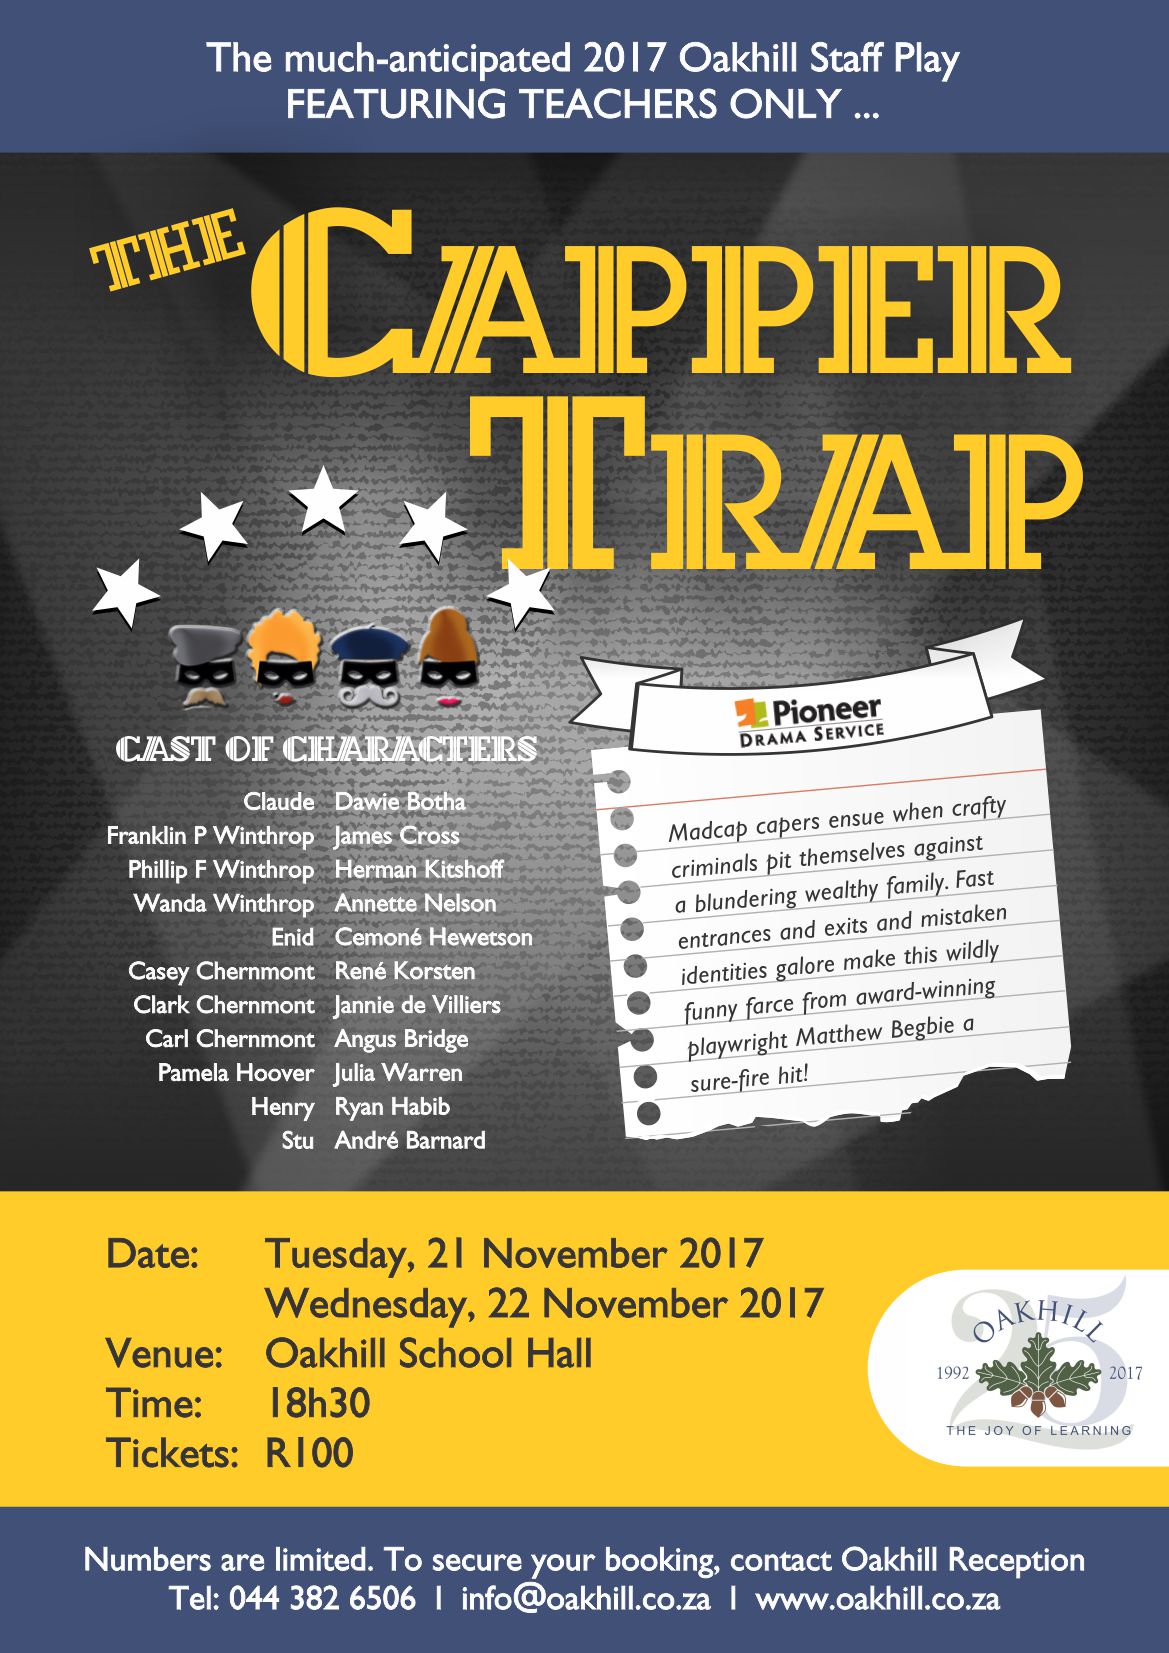 Staff Play 2017 - Capper Trap